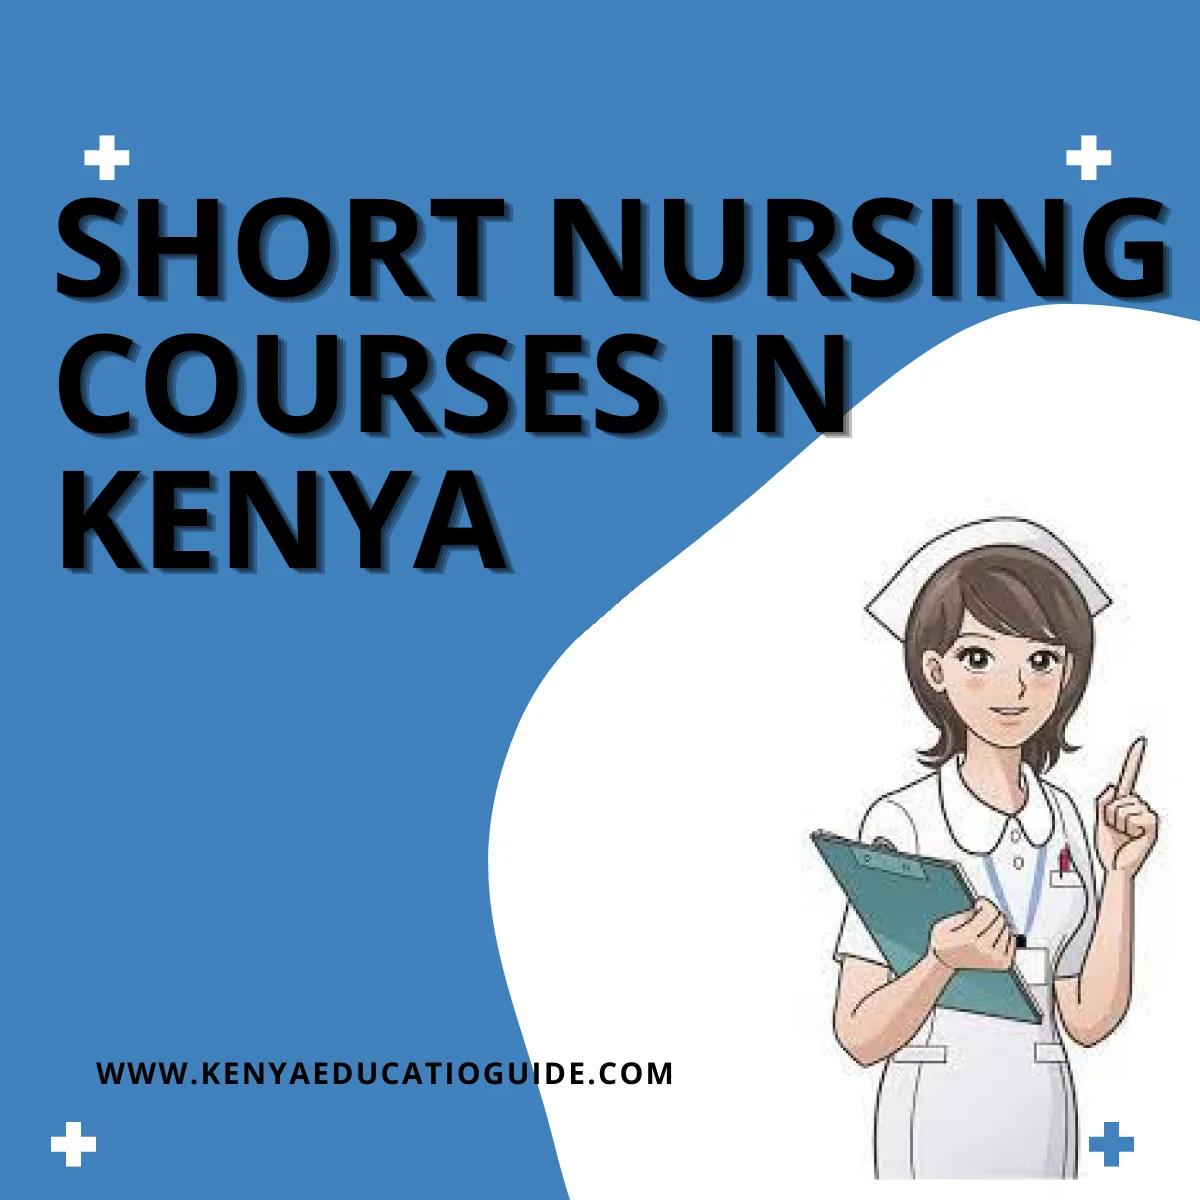 Short Nursing Courses in Kenya